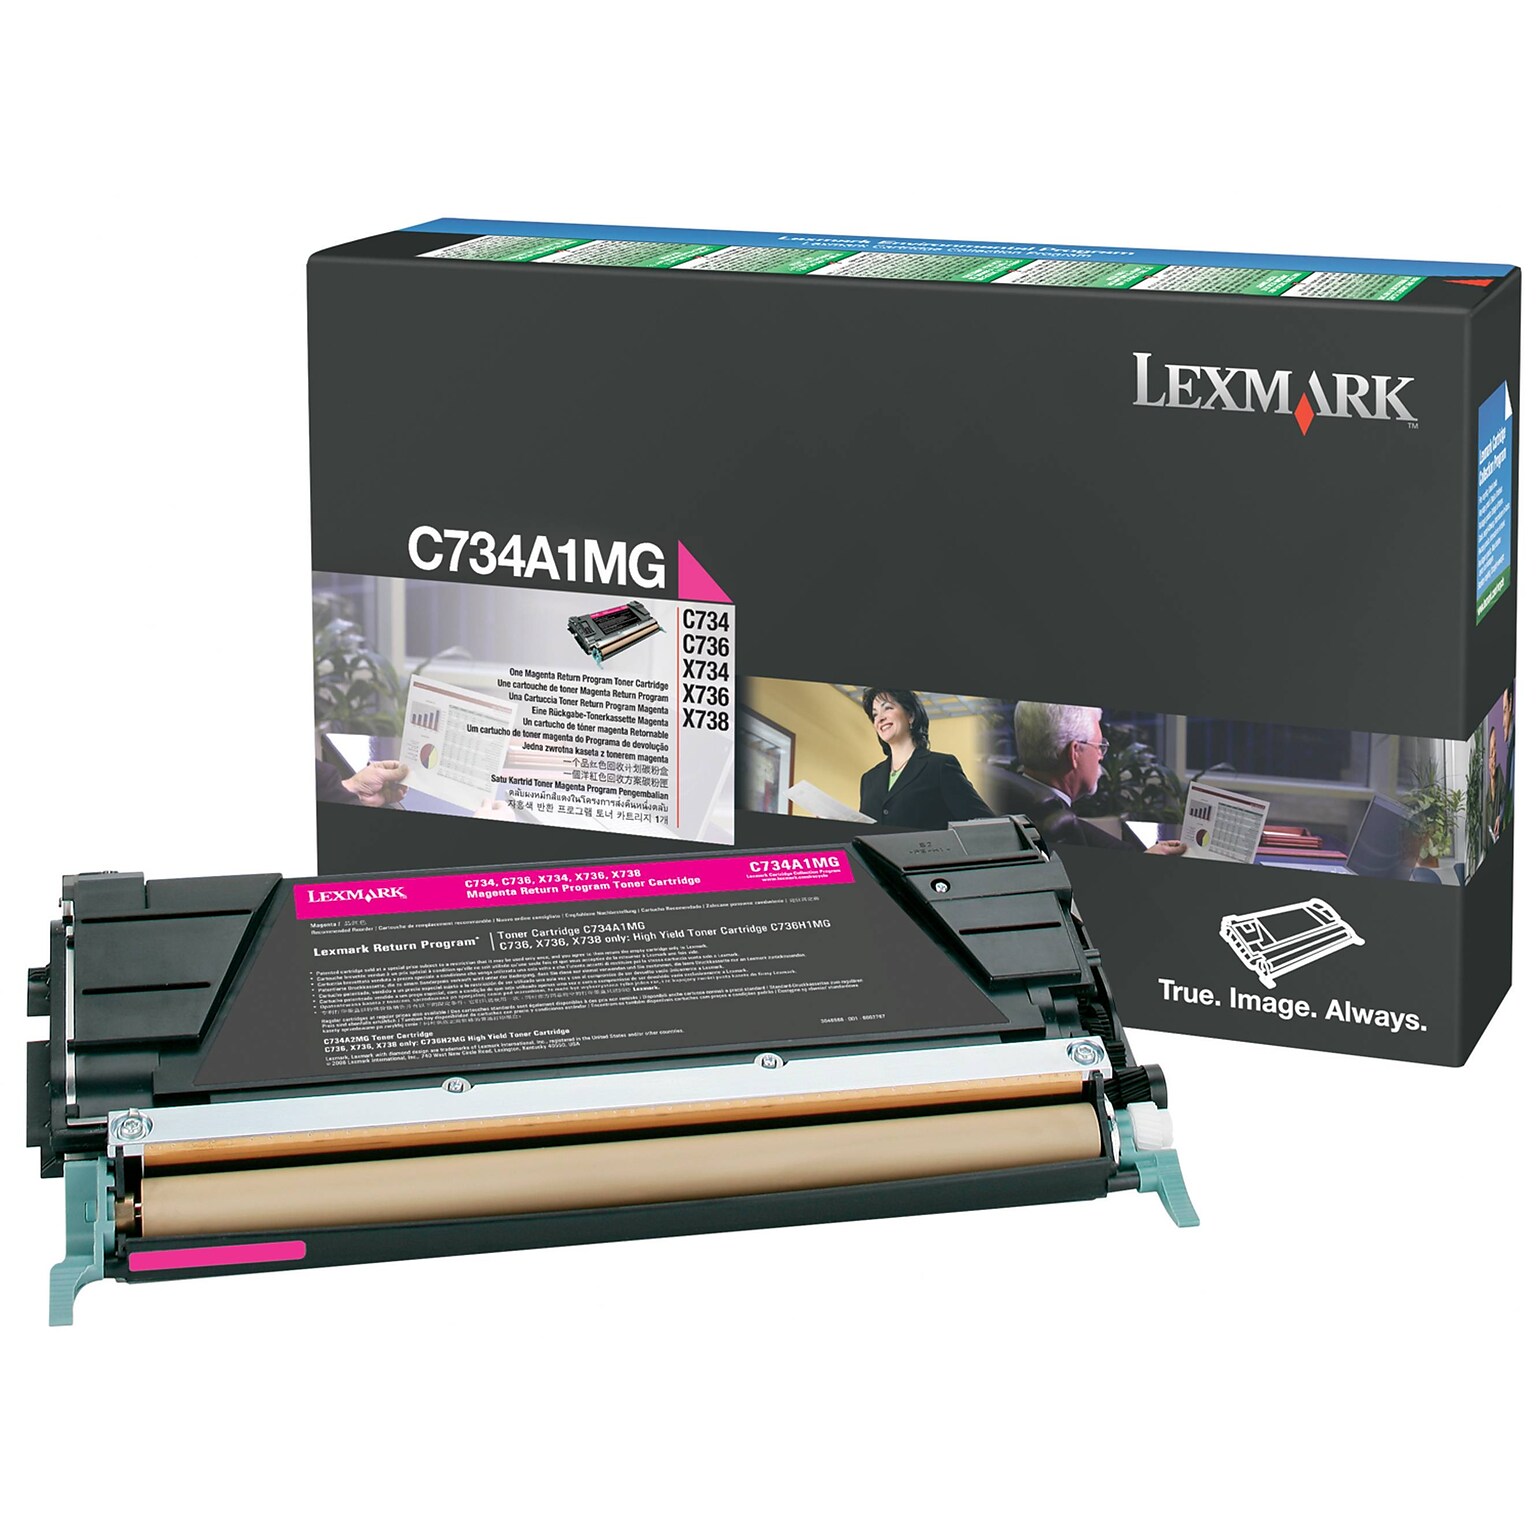 Lexmark C734 Magenta Standard Yield Toner Cartridge